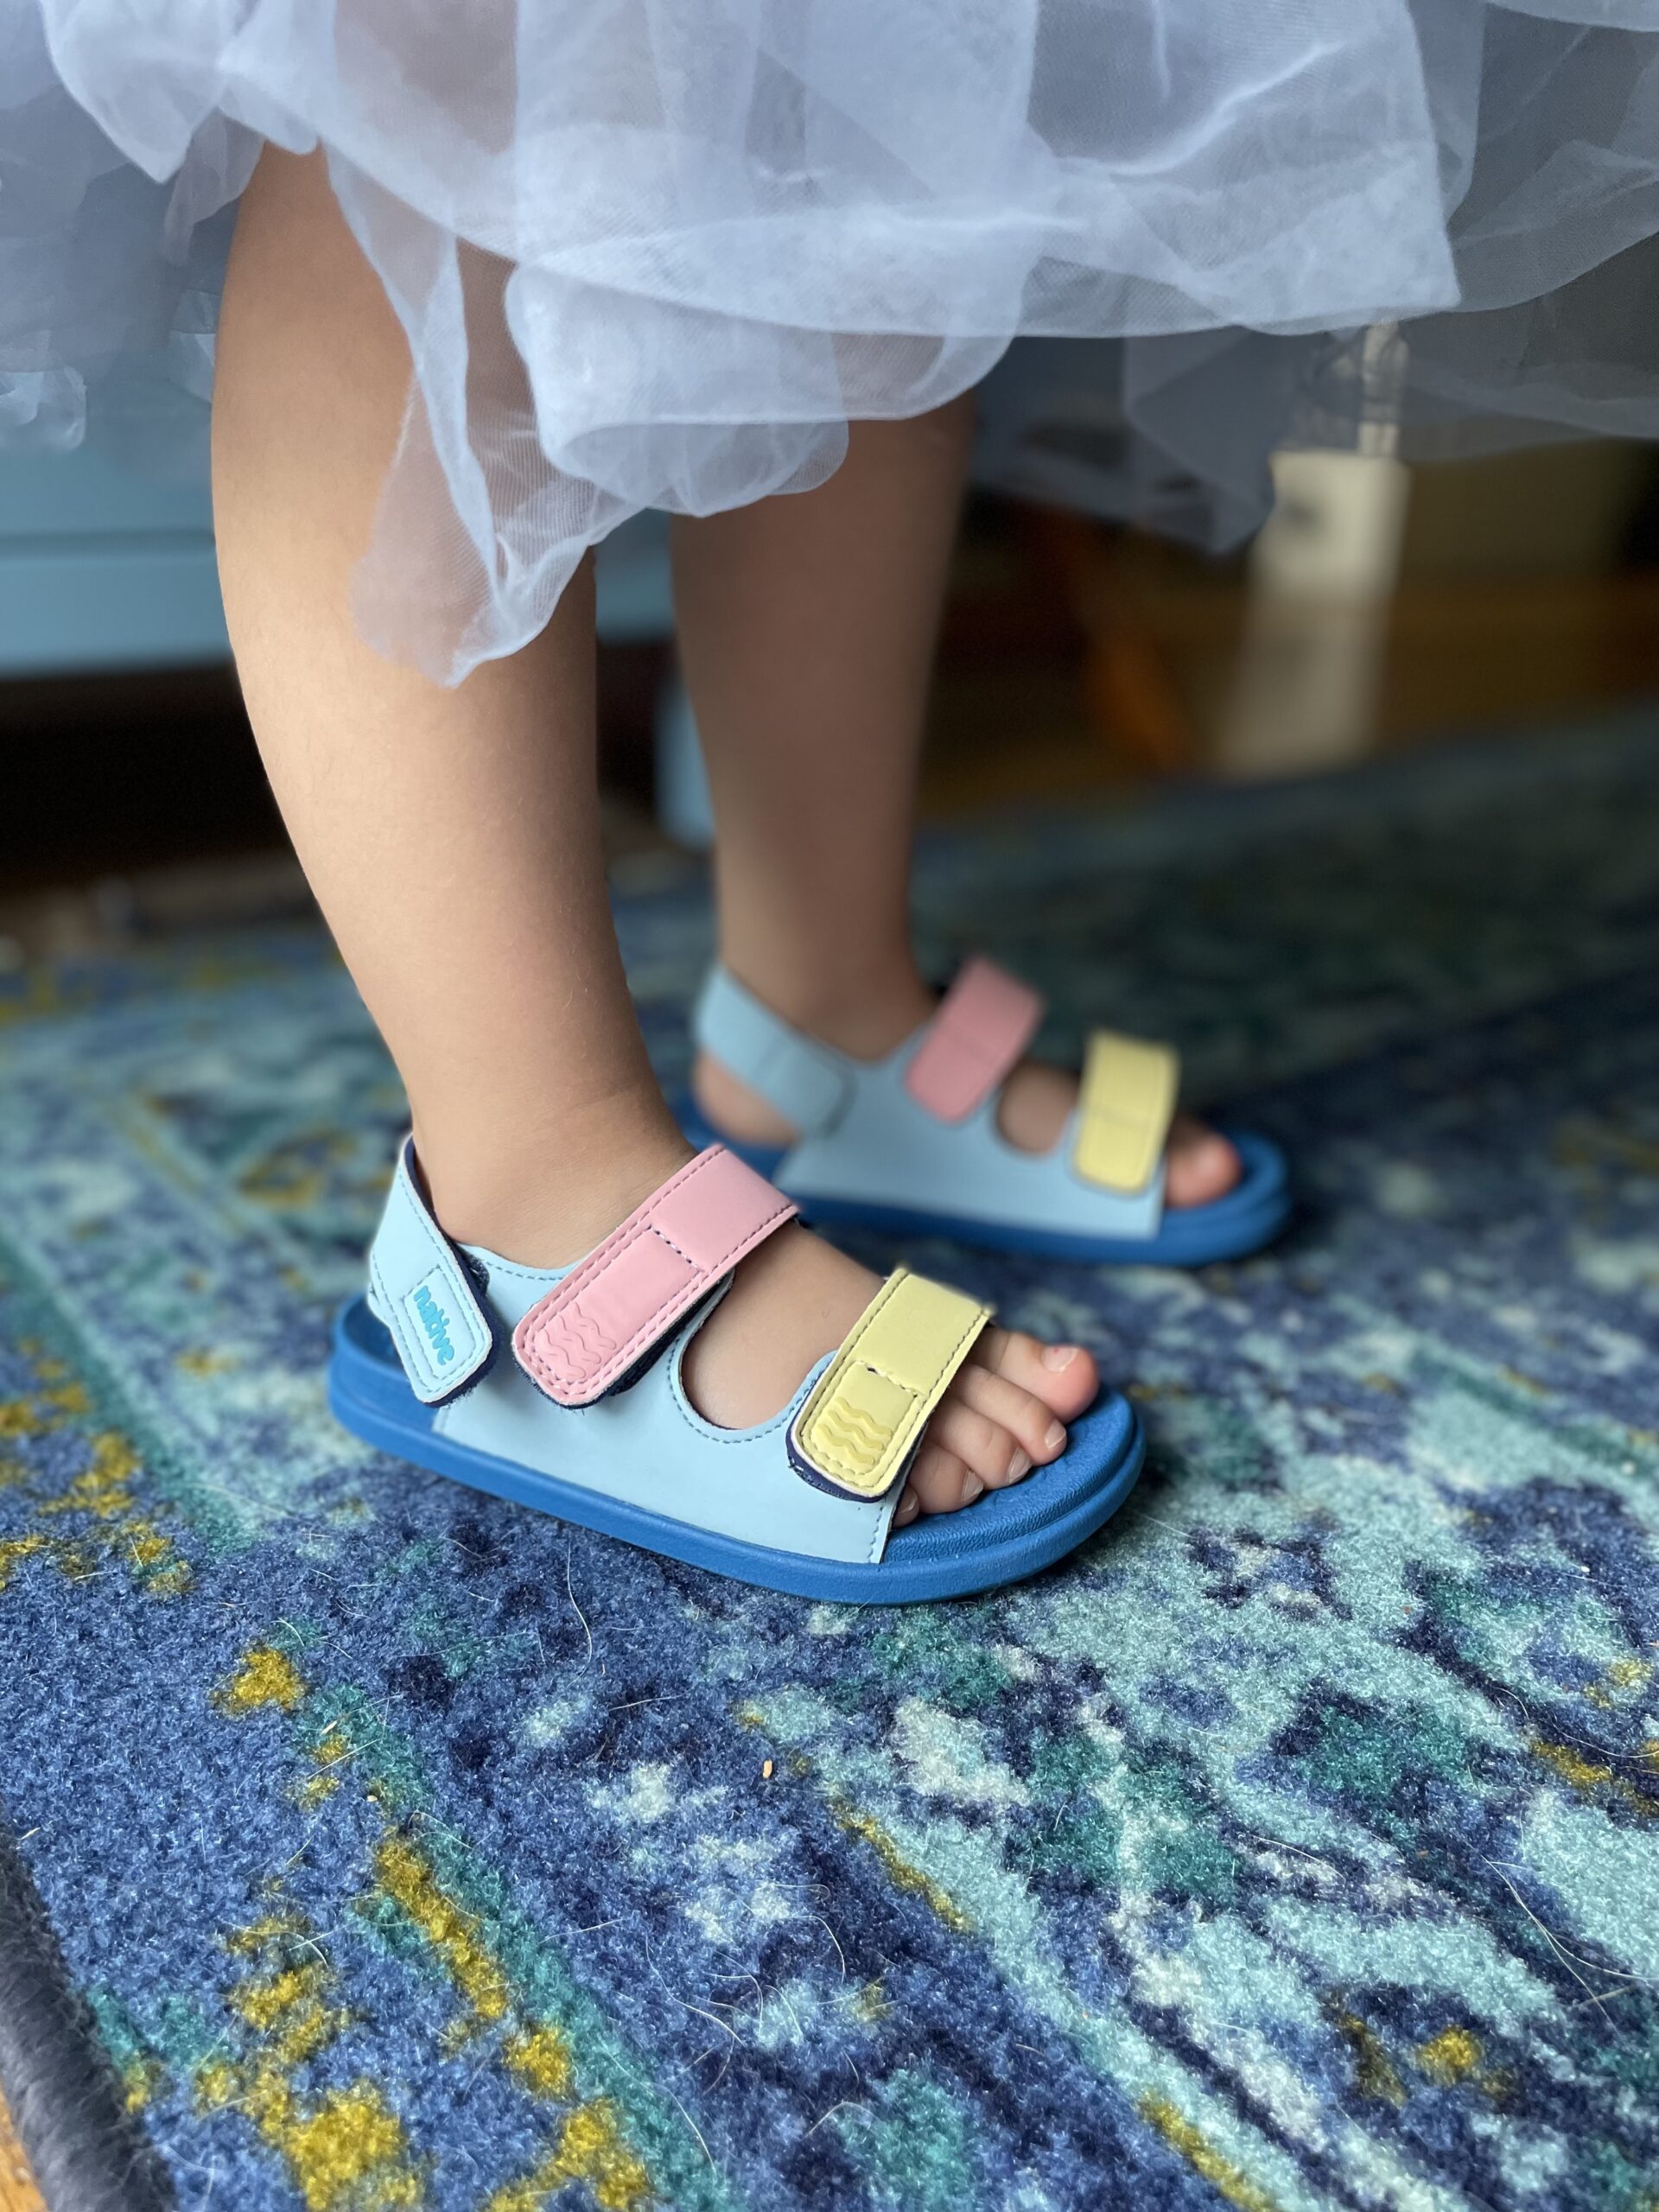 A little girl's feet in Native sandals.